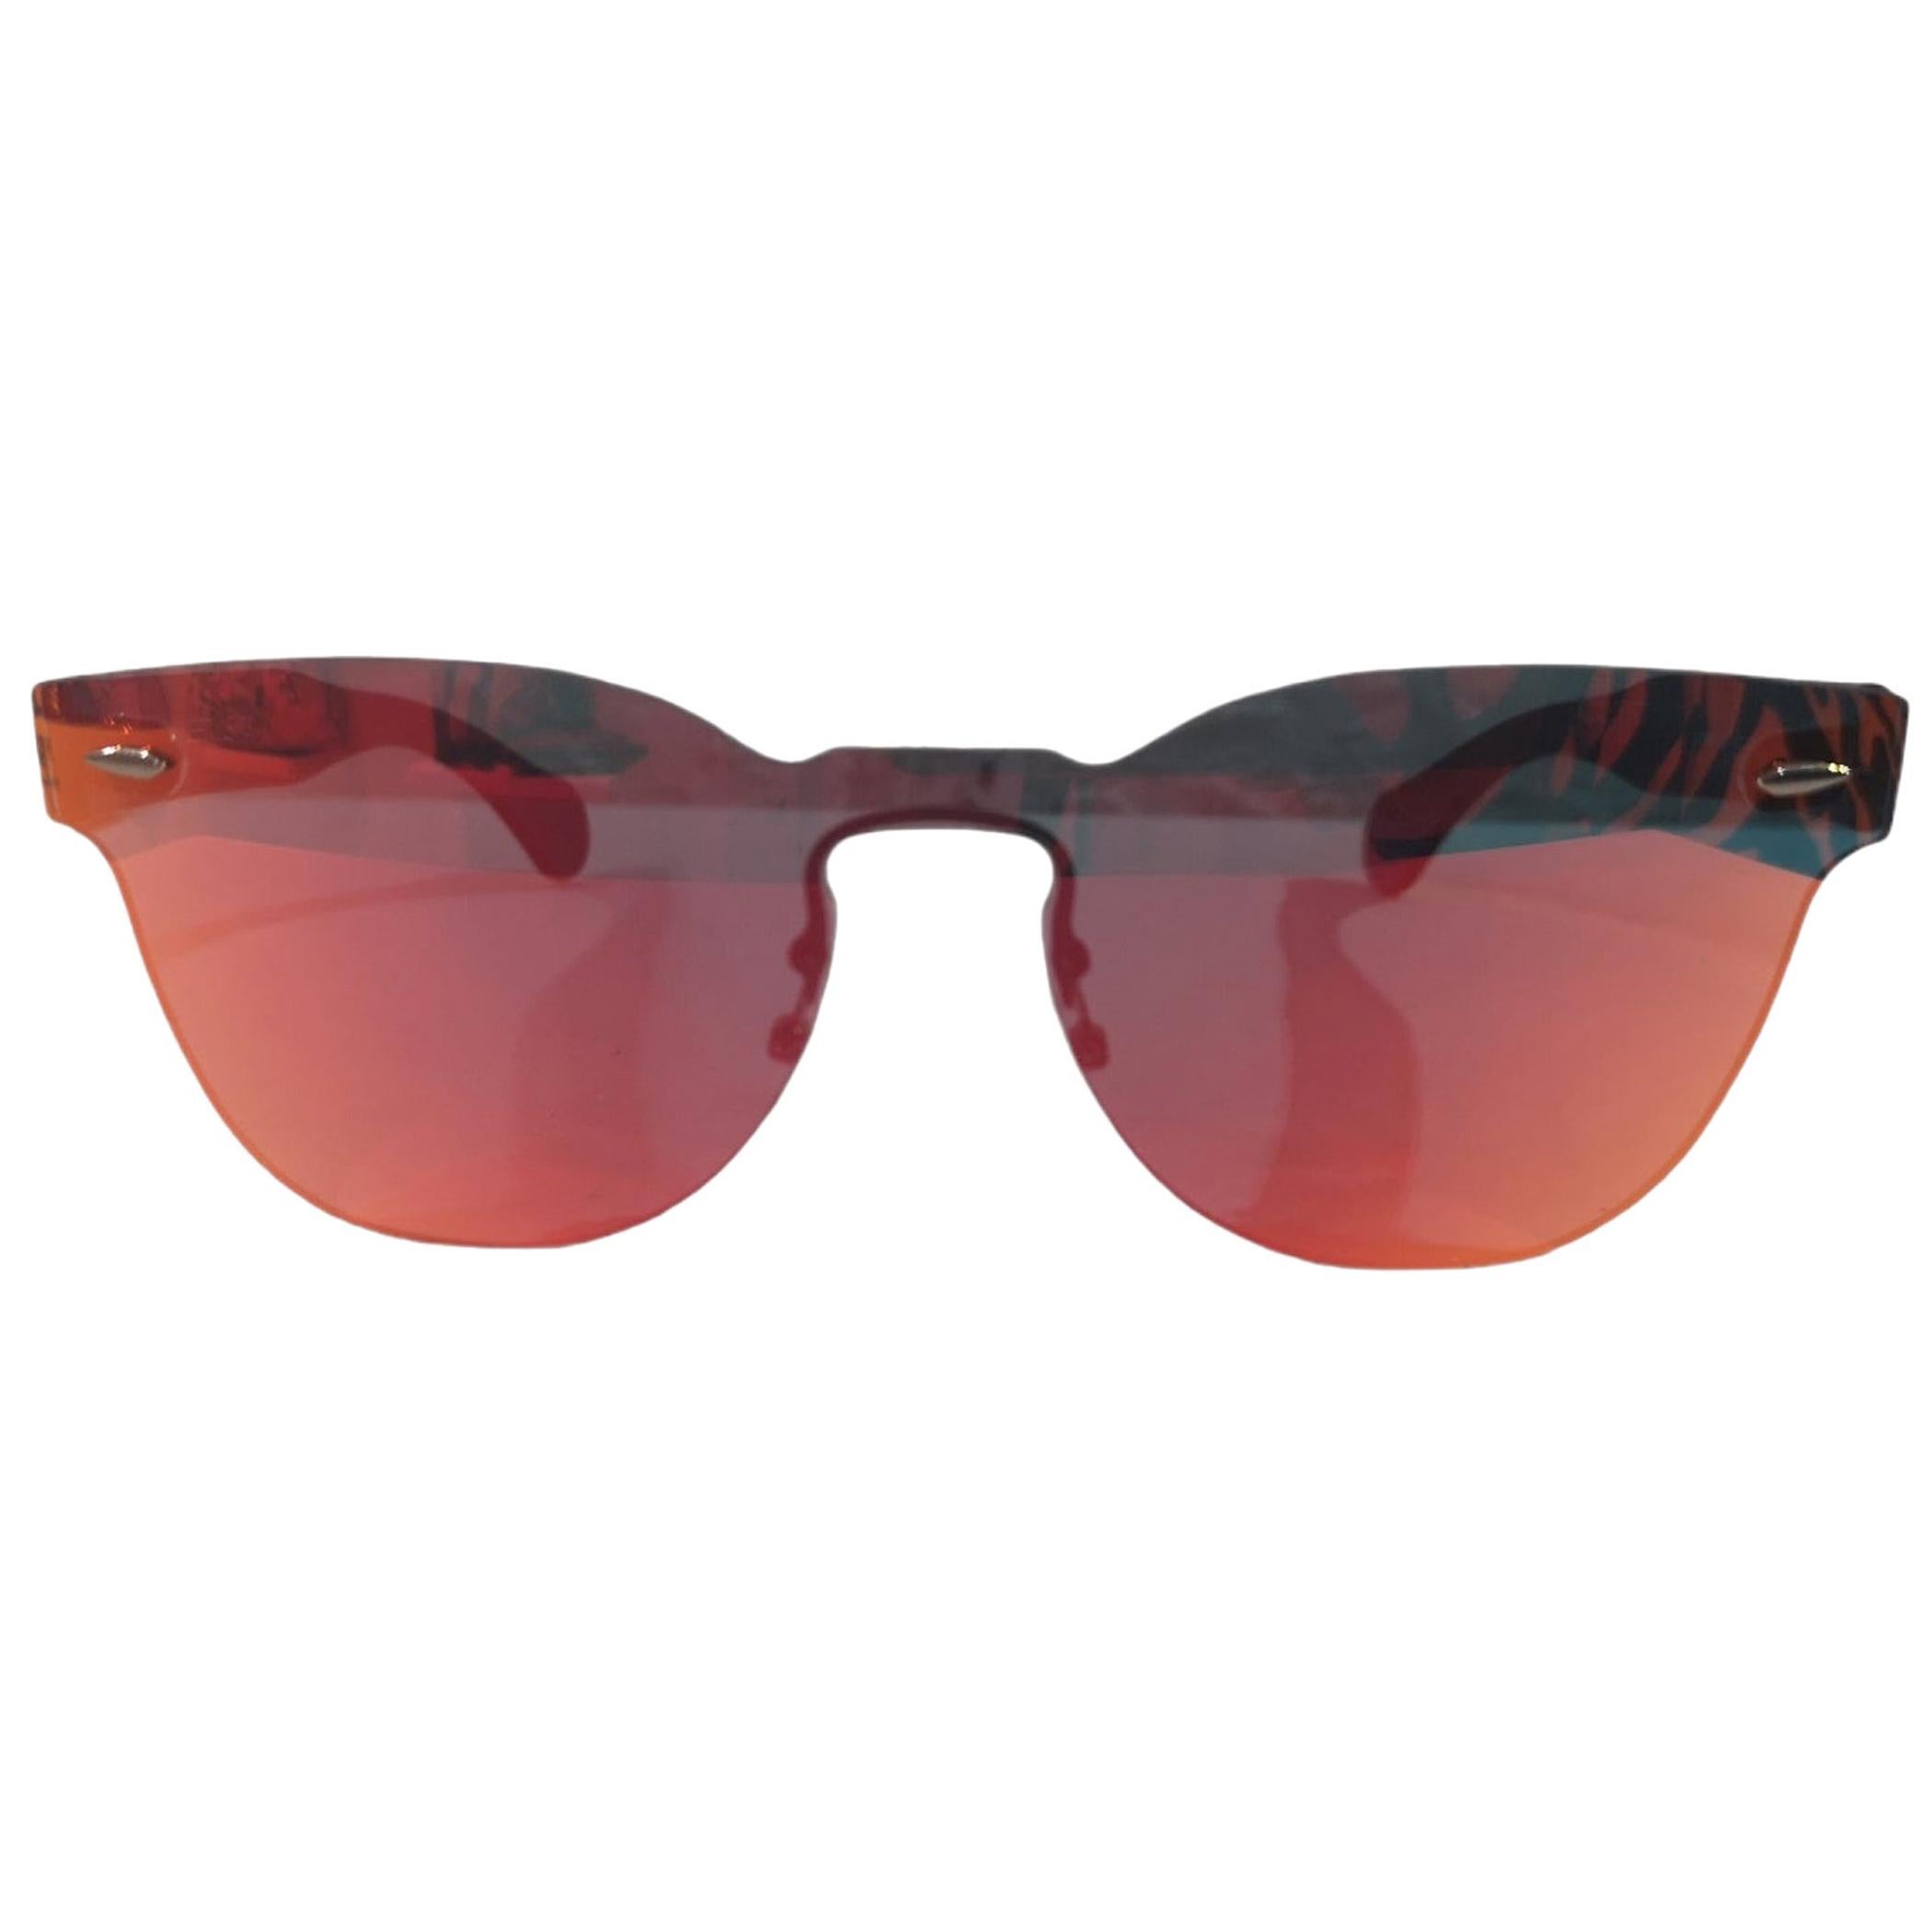 Orange mirrored sunglasses